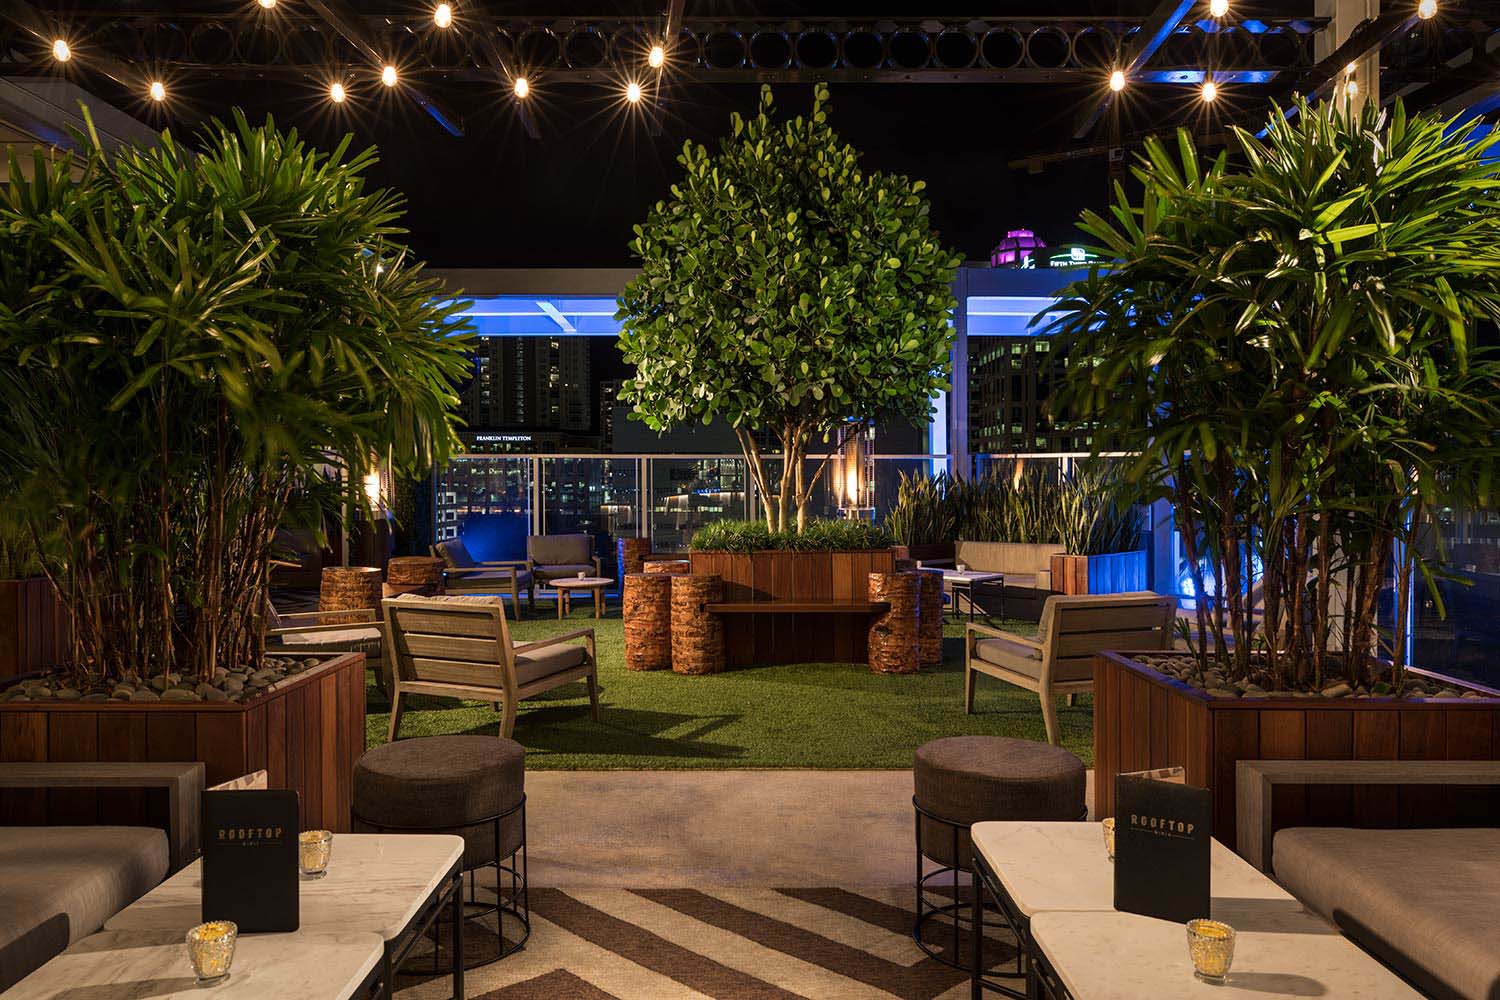  Rooftop  1WLO Hotel Restaurant Nightclub Design  by 